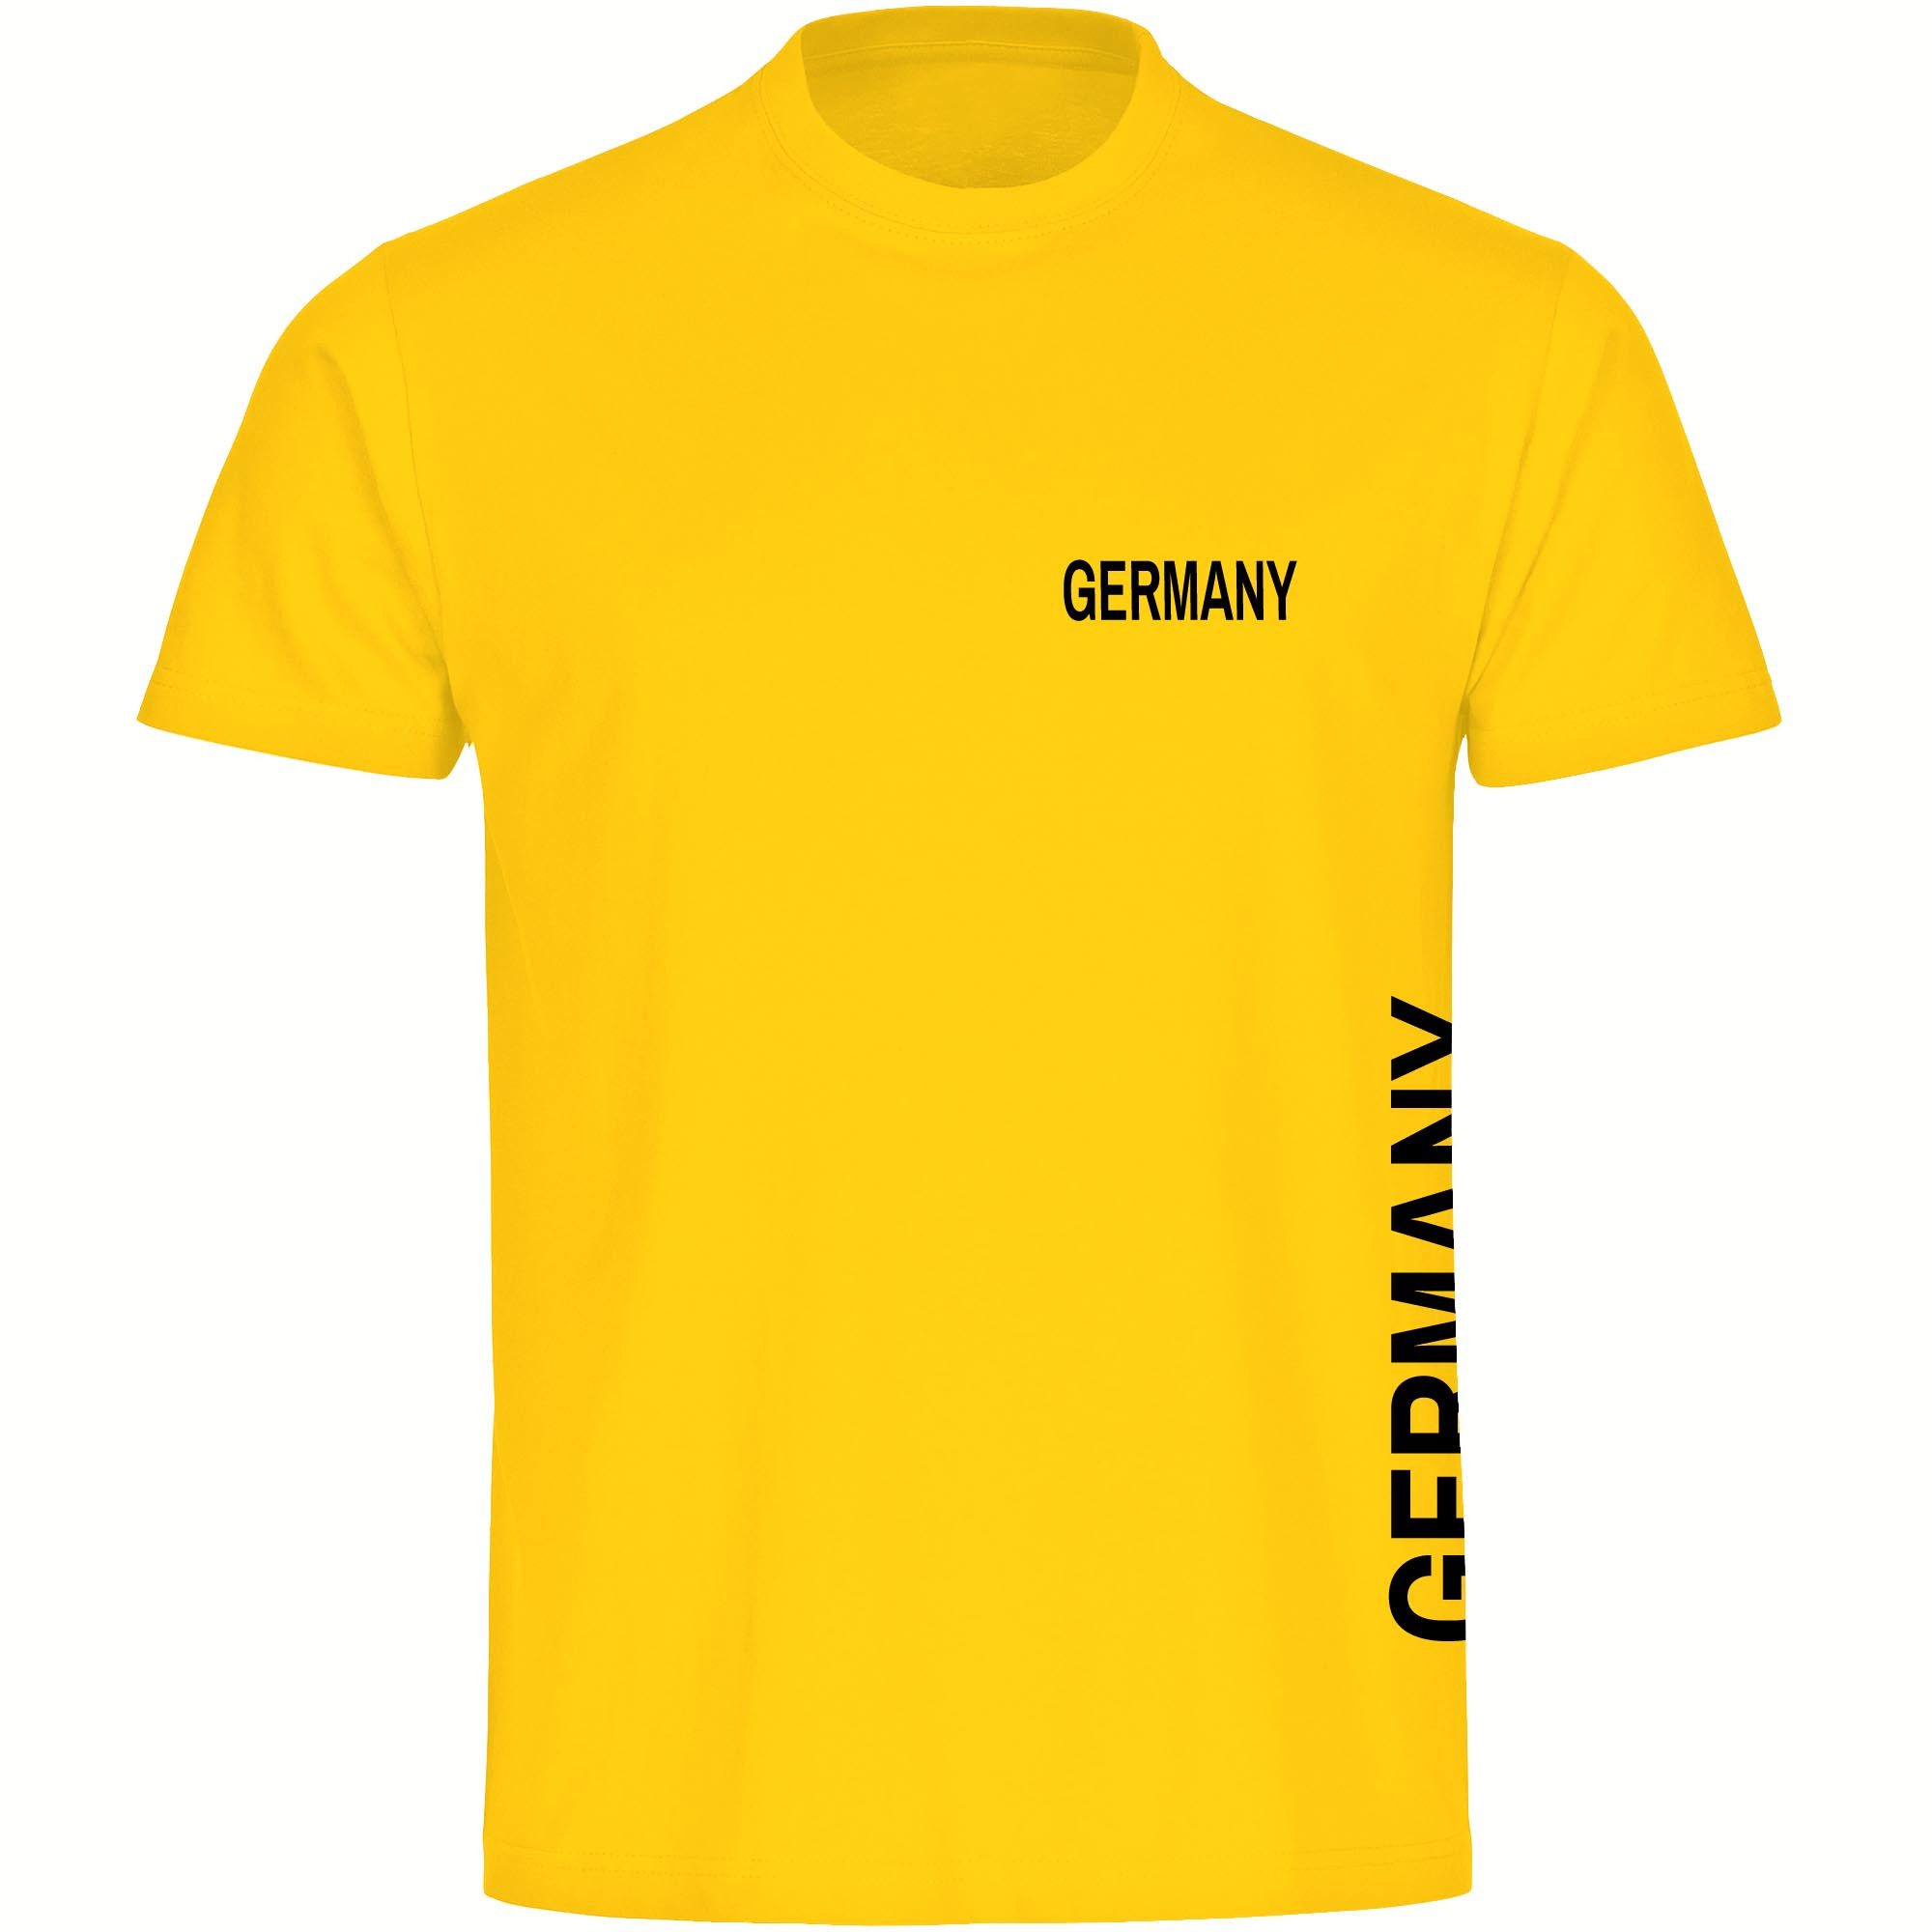 multifanshop T-Shirt Kinder Germany - Brust & Seite - Boy Girl